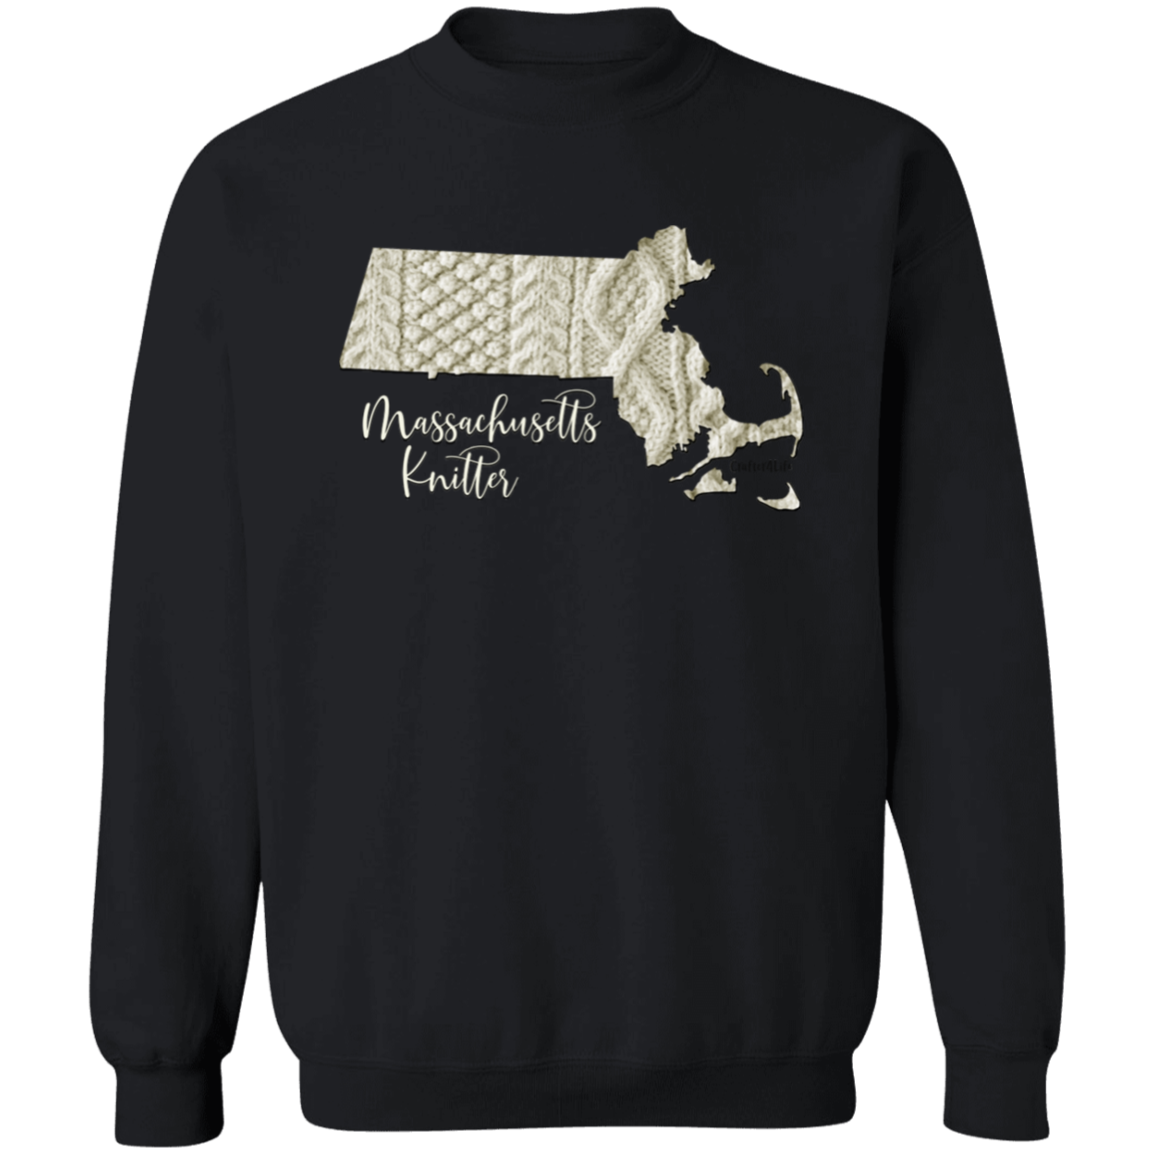 Massachusetts Knitter Crewneck Pullover Sweatshirt